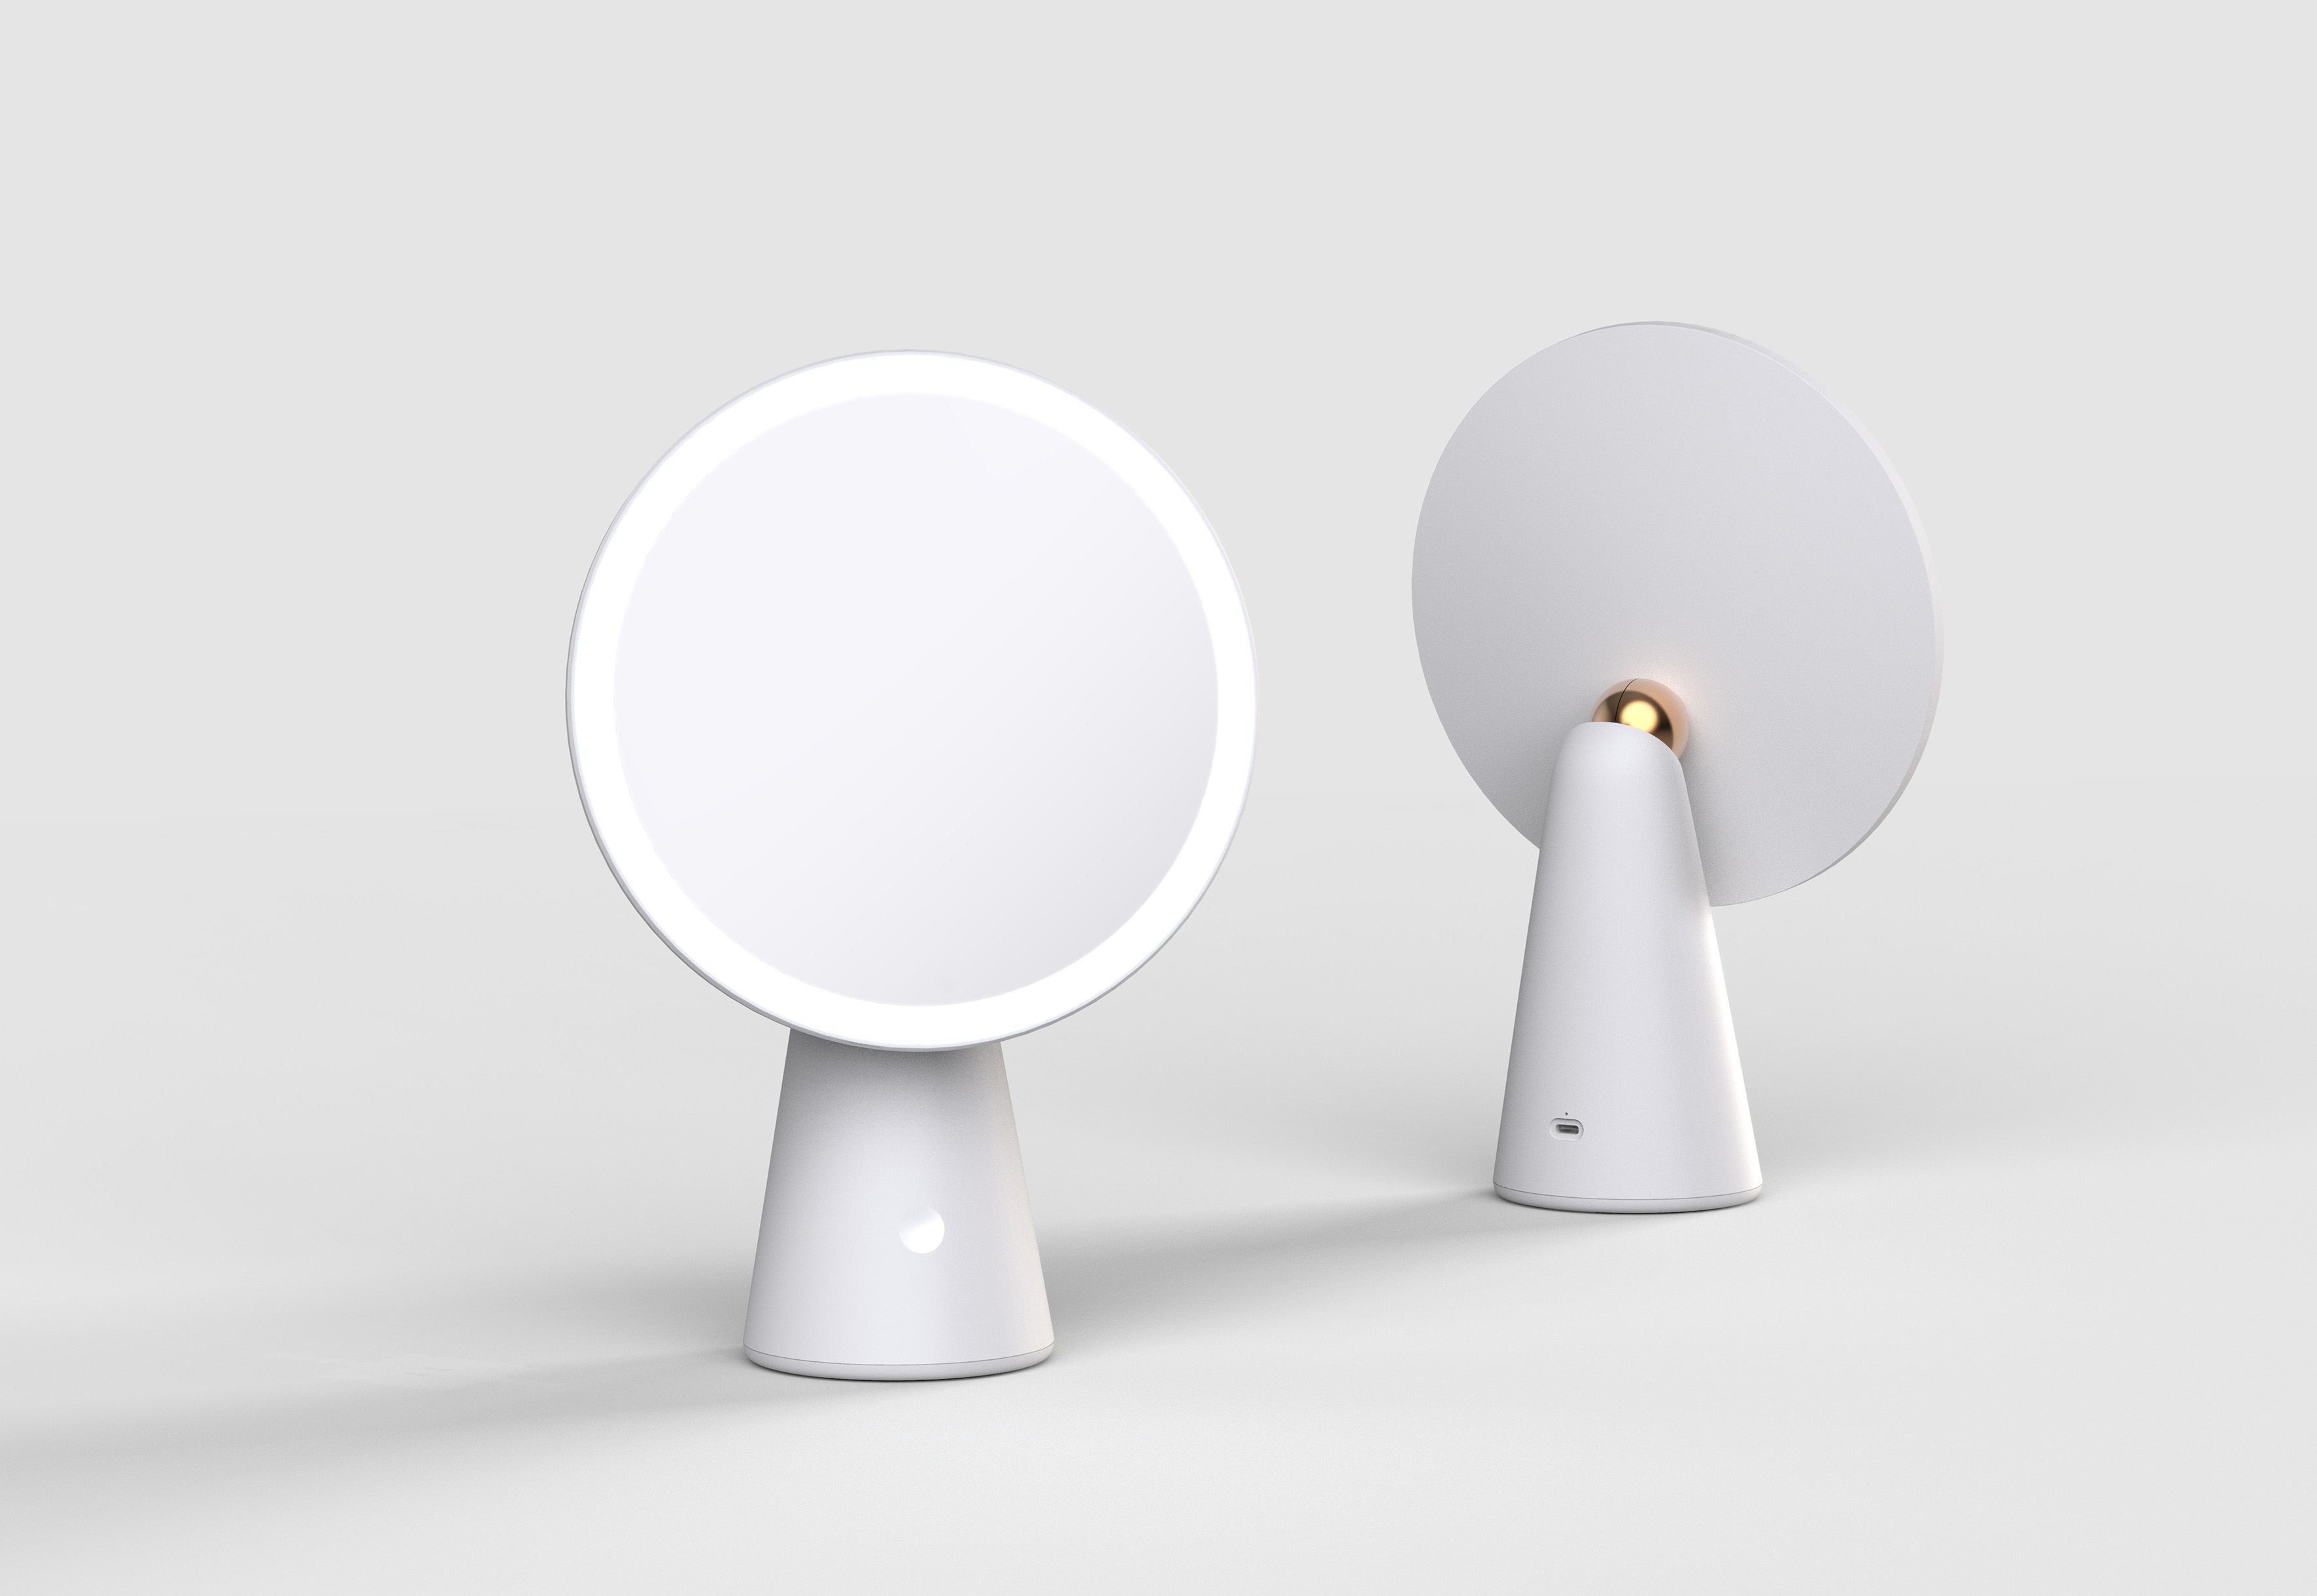 new design high quality led make up mirror lamp led vanity beauty lamp